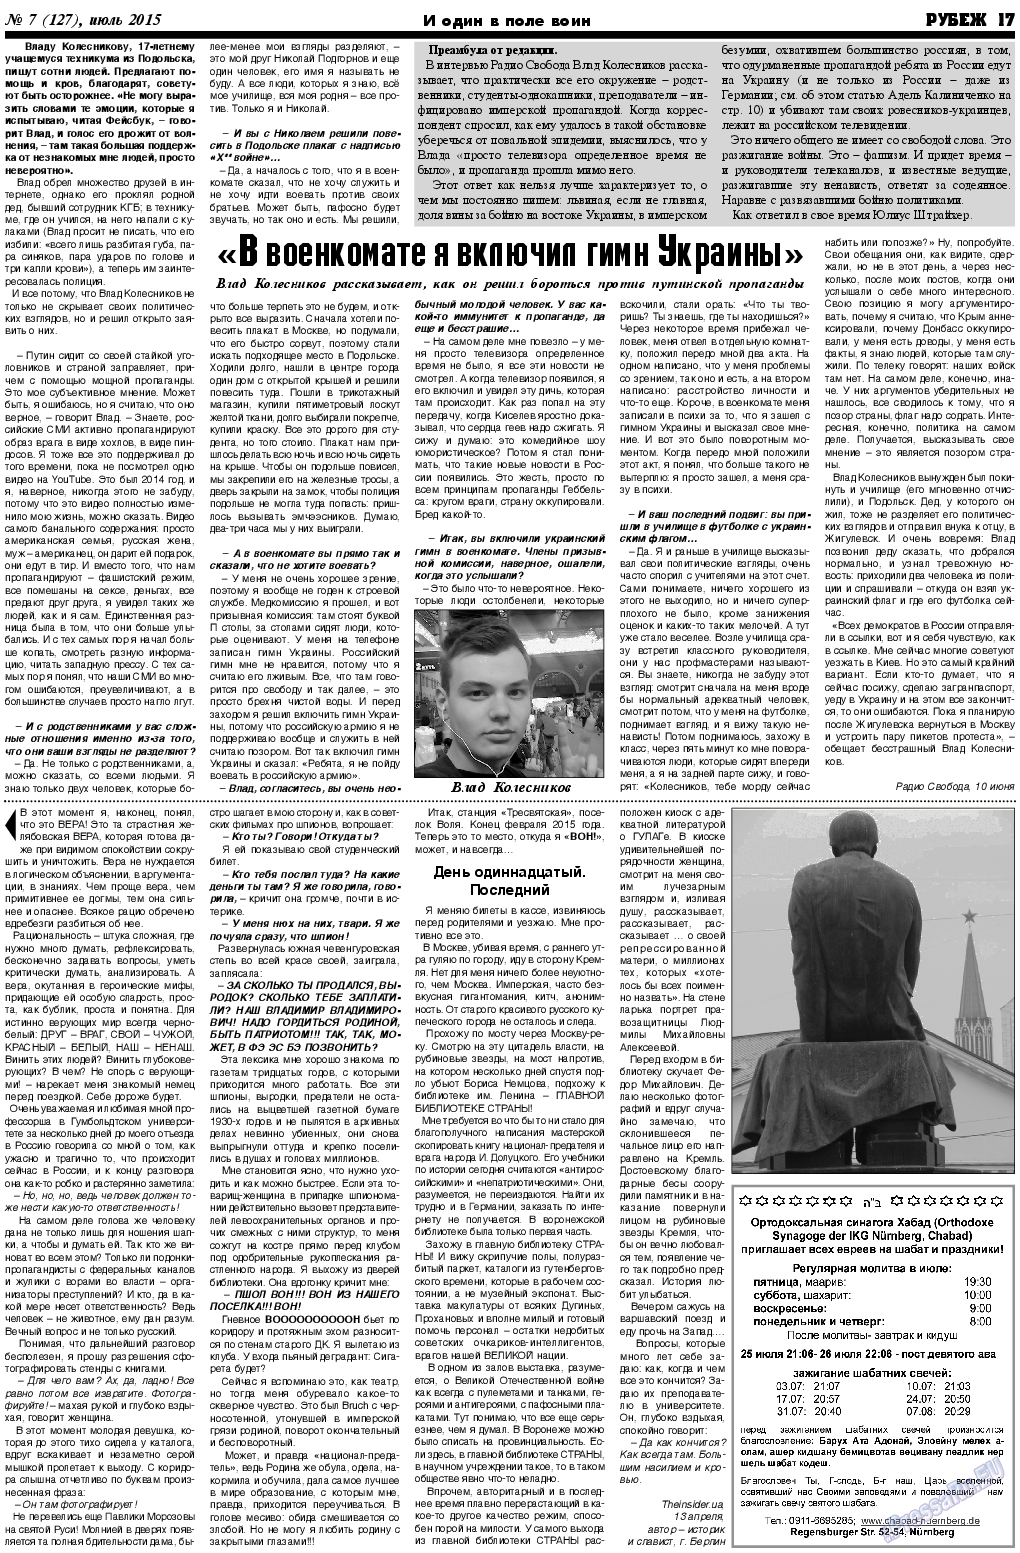 Рубеж, газета. 2015 №7 стр.17